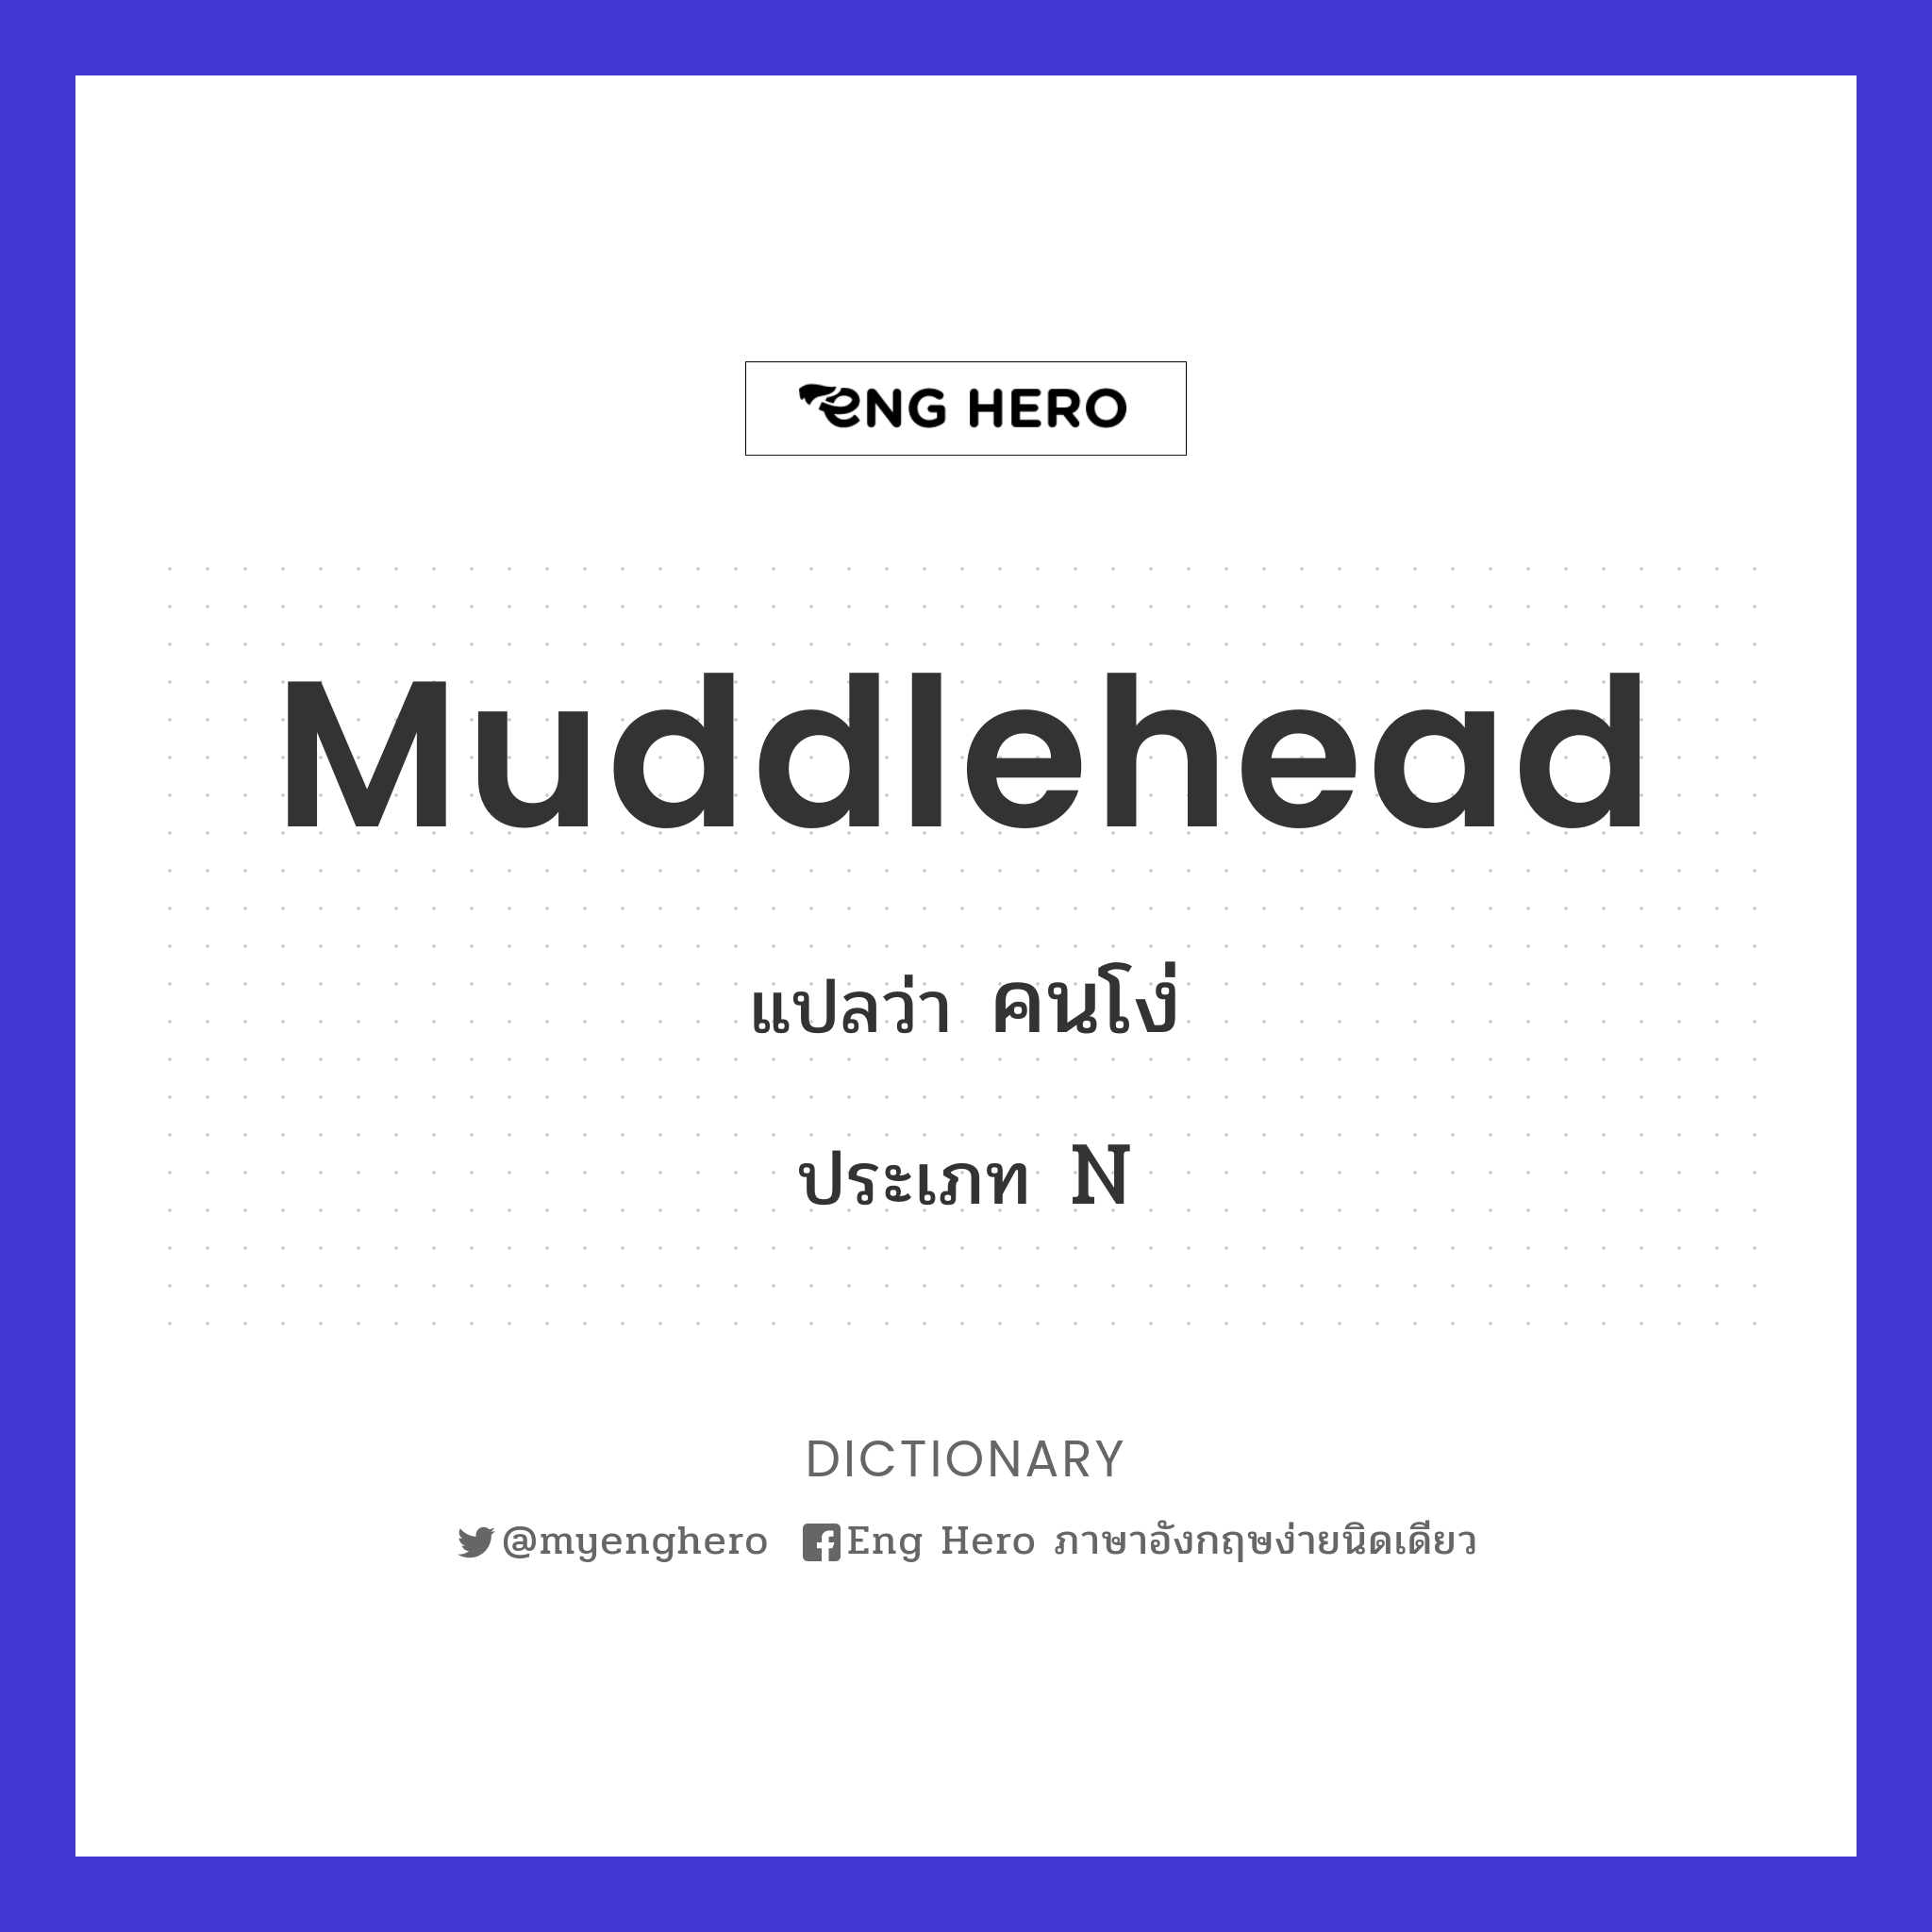 muddlehead